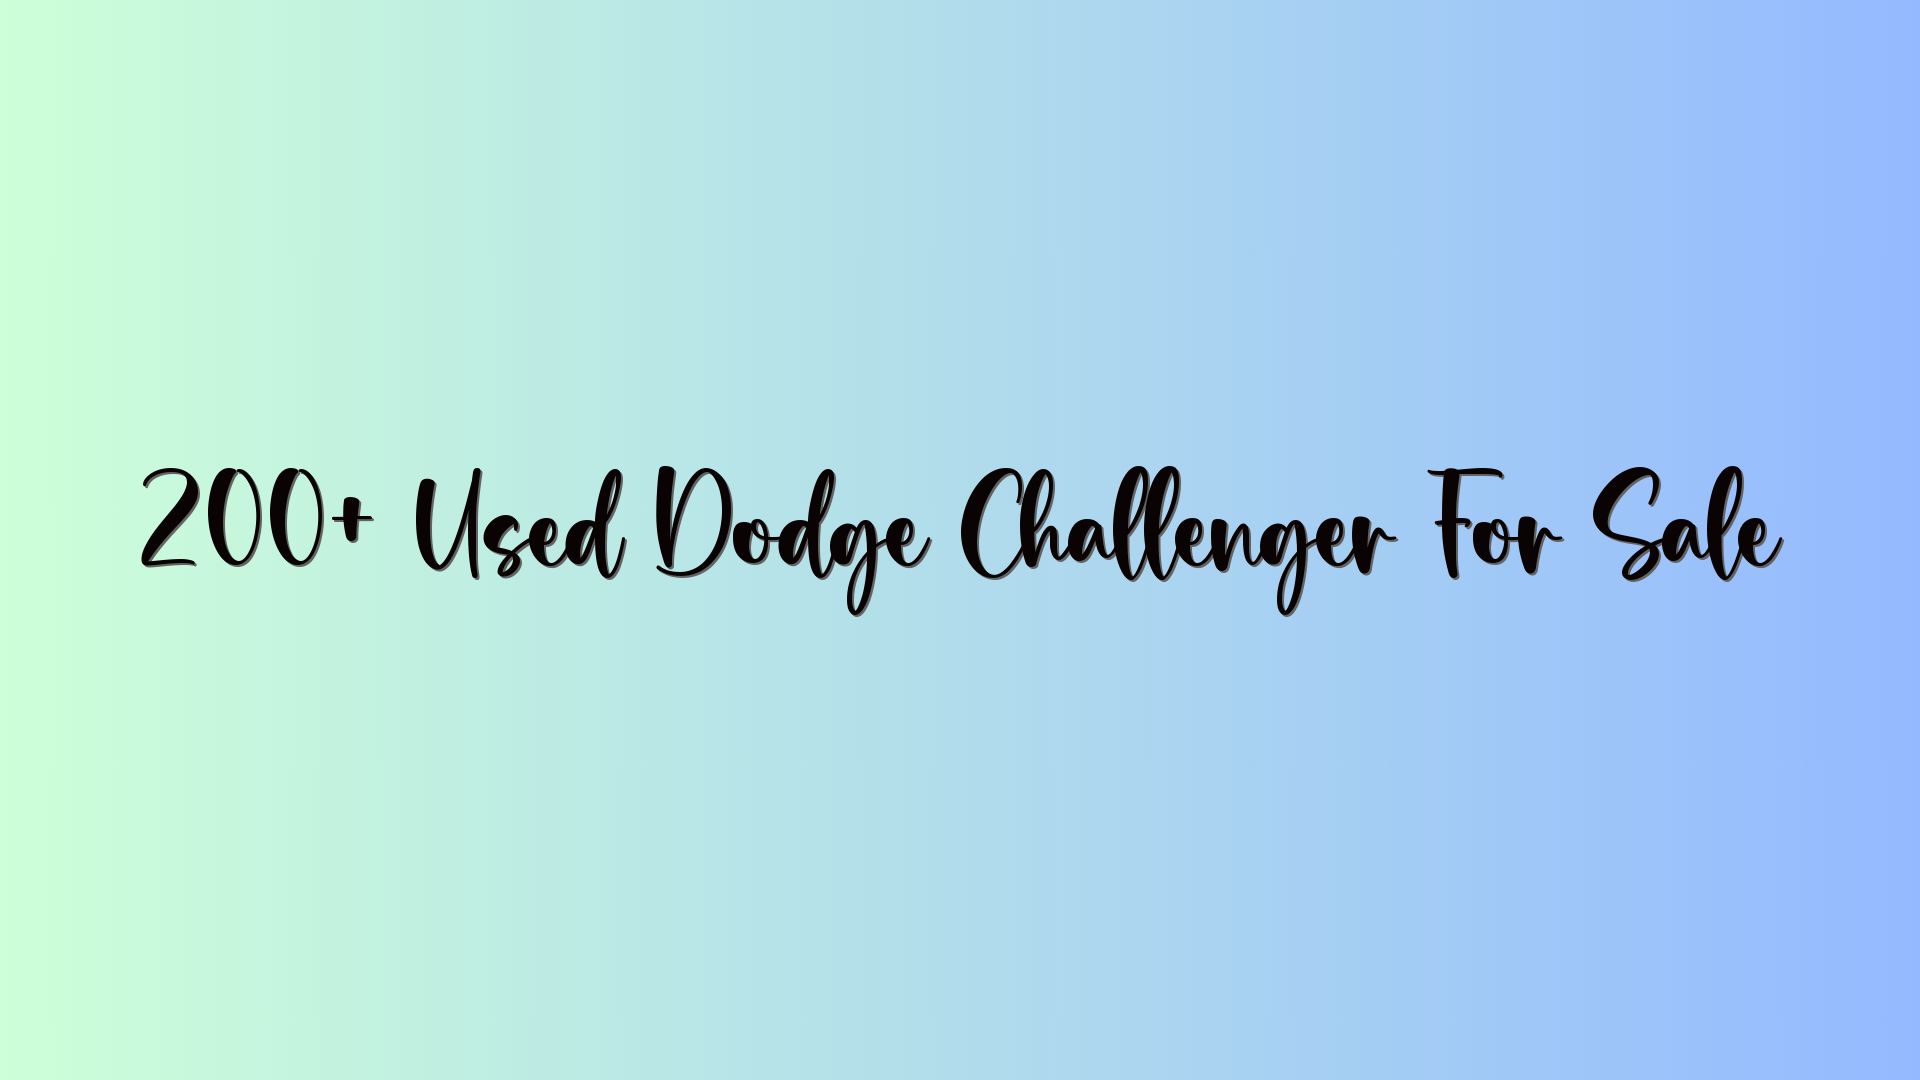 200+ Used Dodge Challenger For Sale